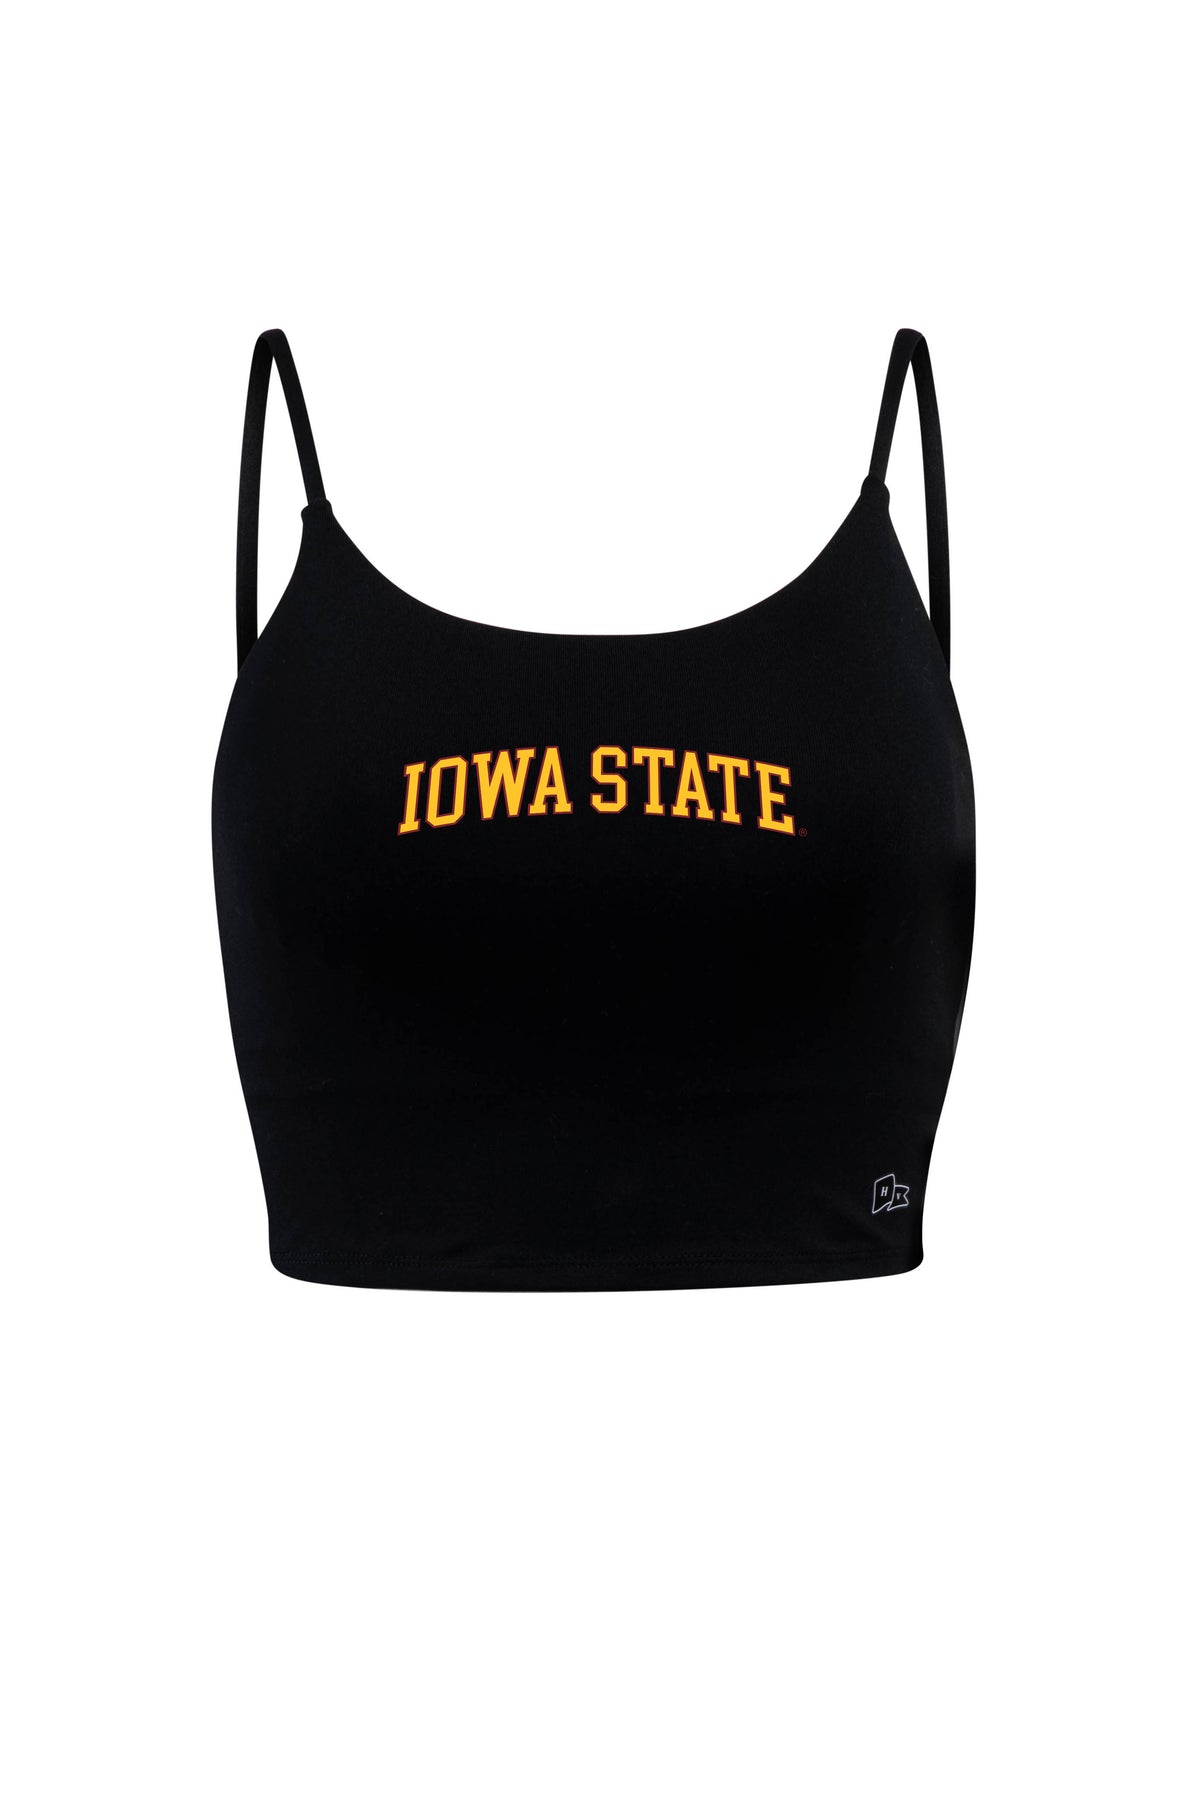 Iowa State University Bra Tank Top